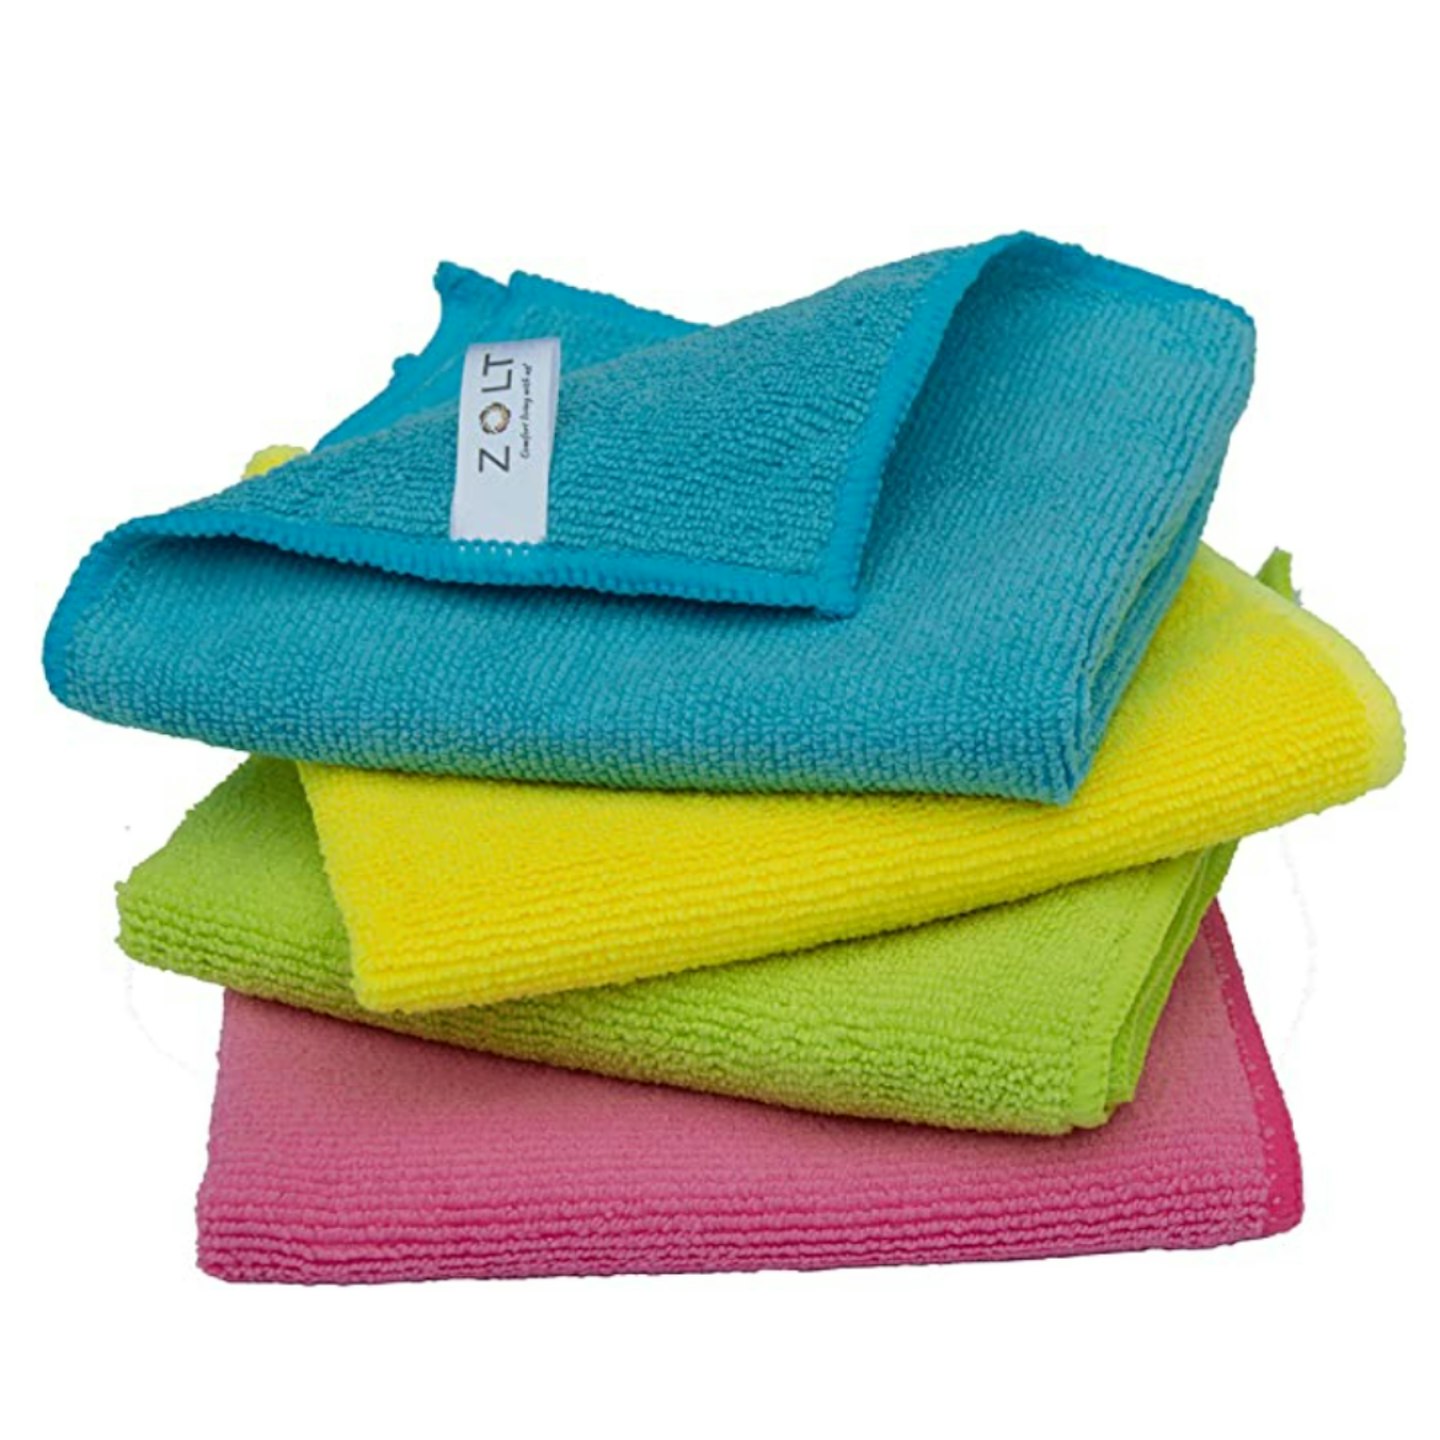 Zolt Microfibre Cloths - Super Absorbent & Soft Cleaning Cloths (x4)